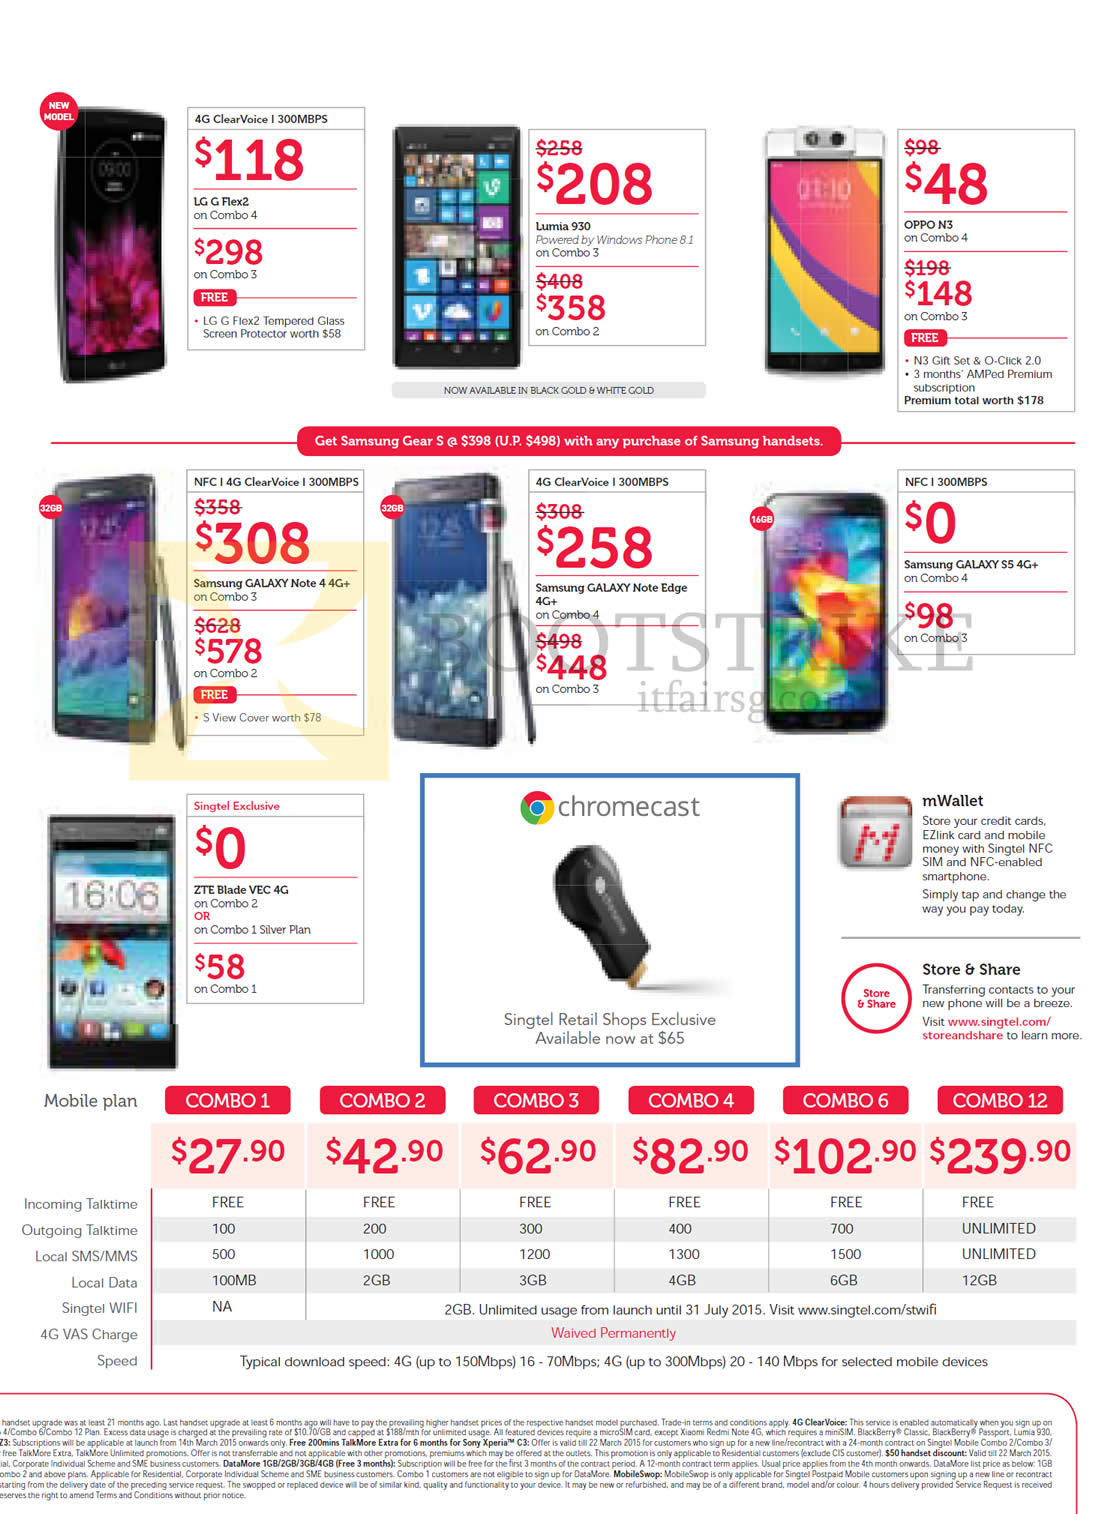 IT SHOW 2015 price list image brochure of Singtel Mobile Phones LG G Flex2, Lumia 930, OPPO N3, Samsung GALAXY Note 4, Note Edge, S5, ZTE Blade VEC 4G, Chromecast, Mobile Plans Combo